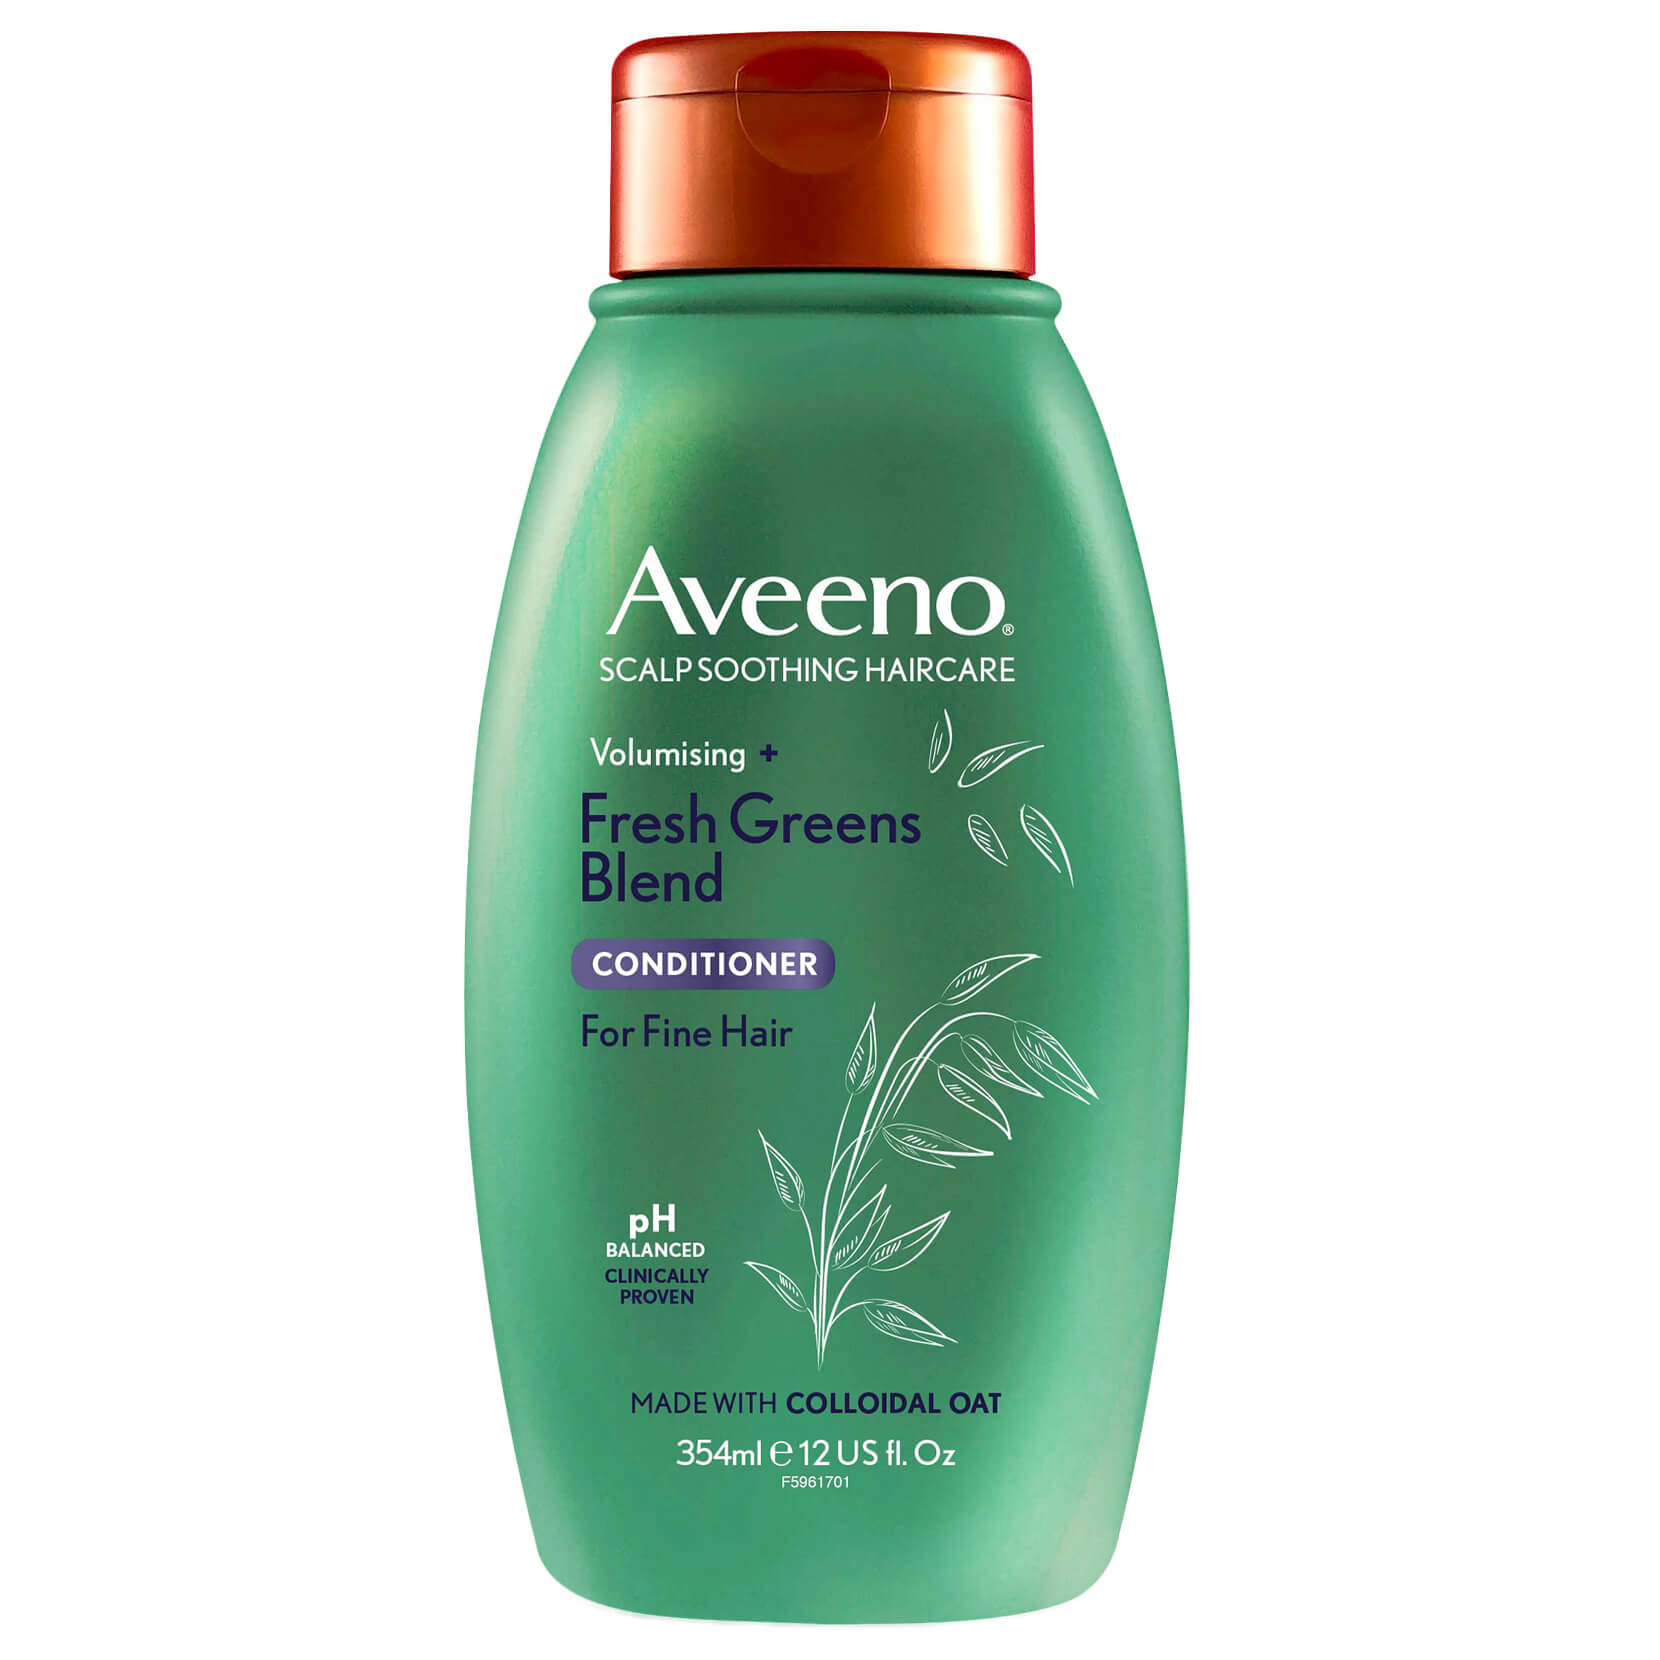 Aveeno Volumising+ Fresh Greens Blend Conditioner - 354ml